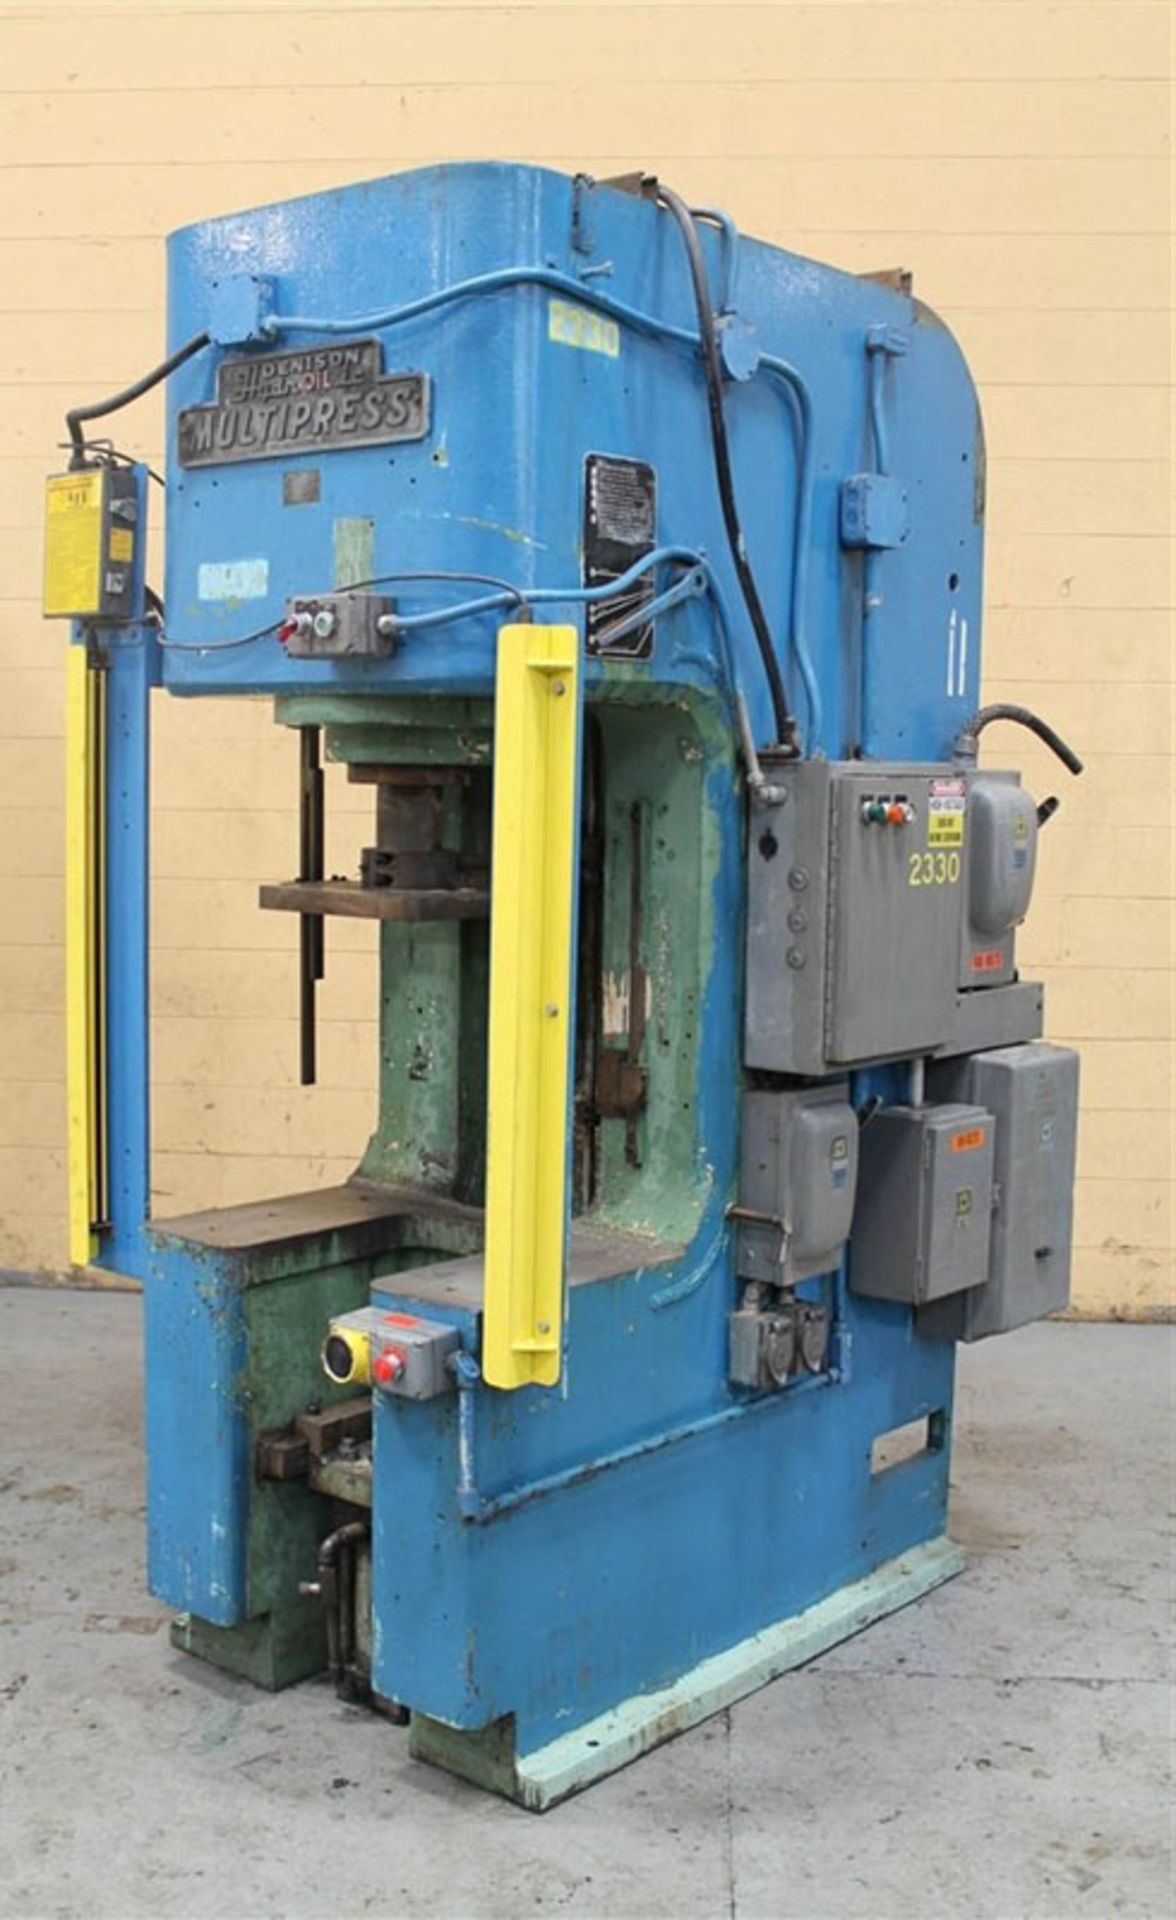 50-Ton Denison Multipress Hydraulic C-Frame Press, Mdl. FW-50, S/N: 2330, Located in Holland, OH